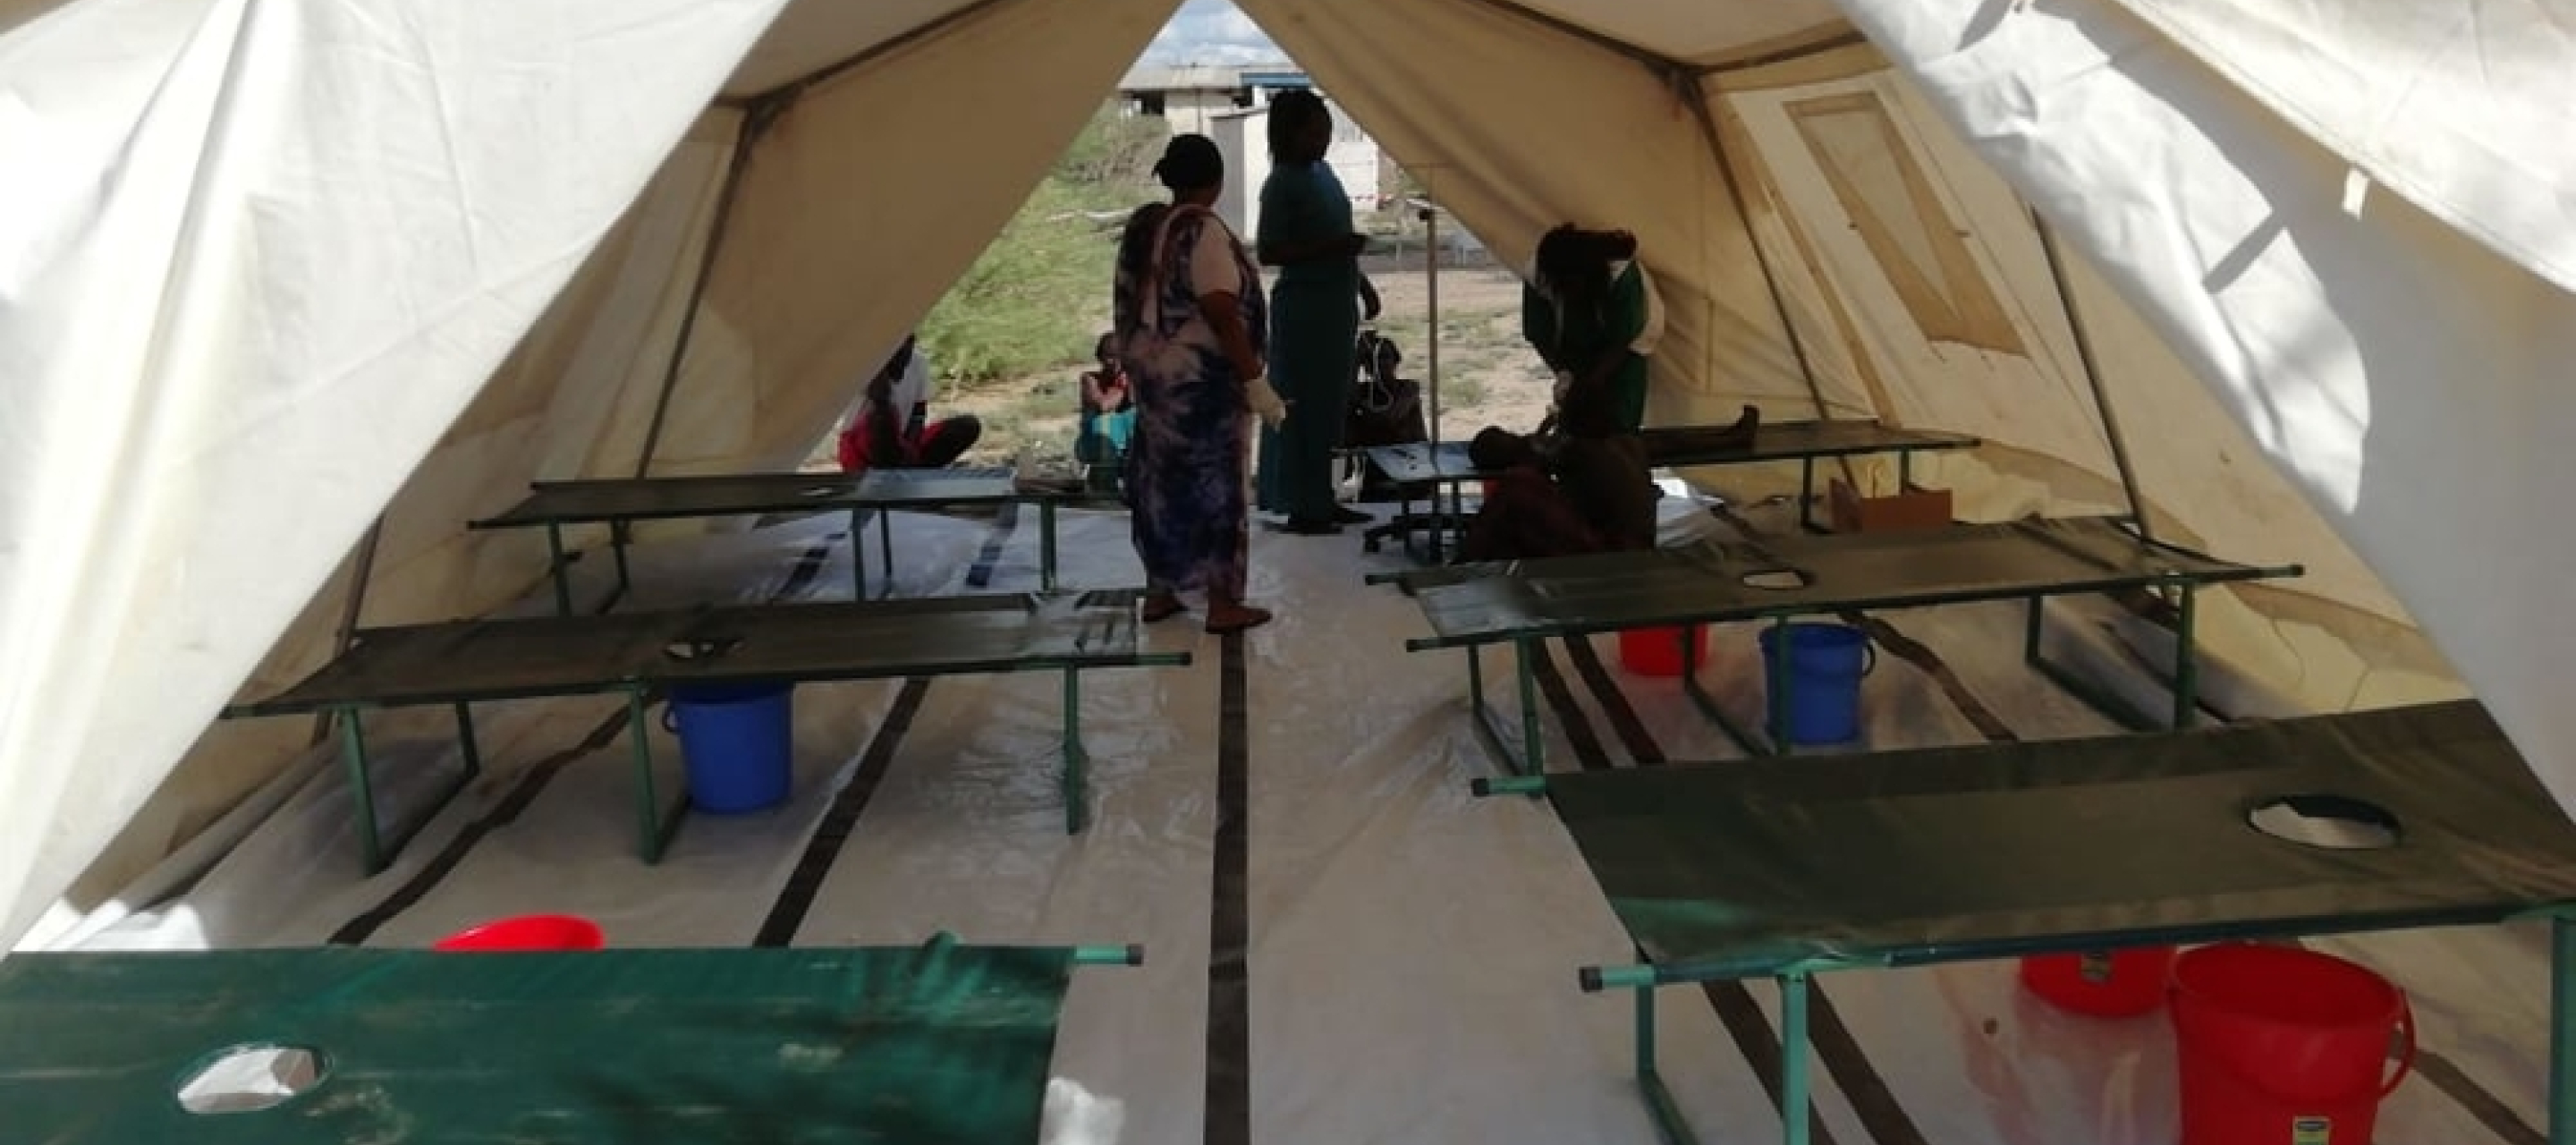 Kenia Cholera-Behandlung im Zelt 